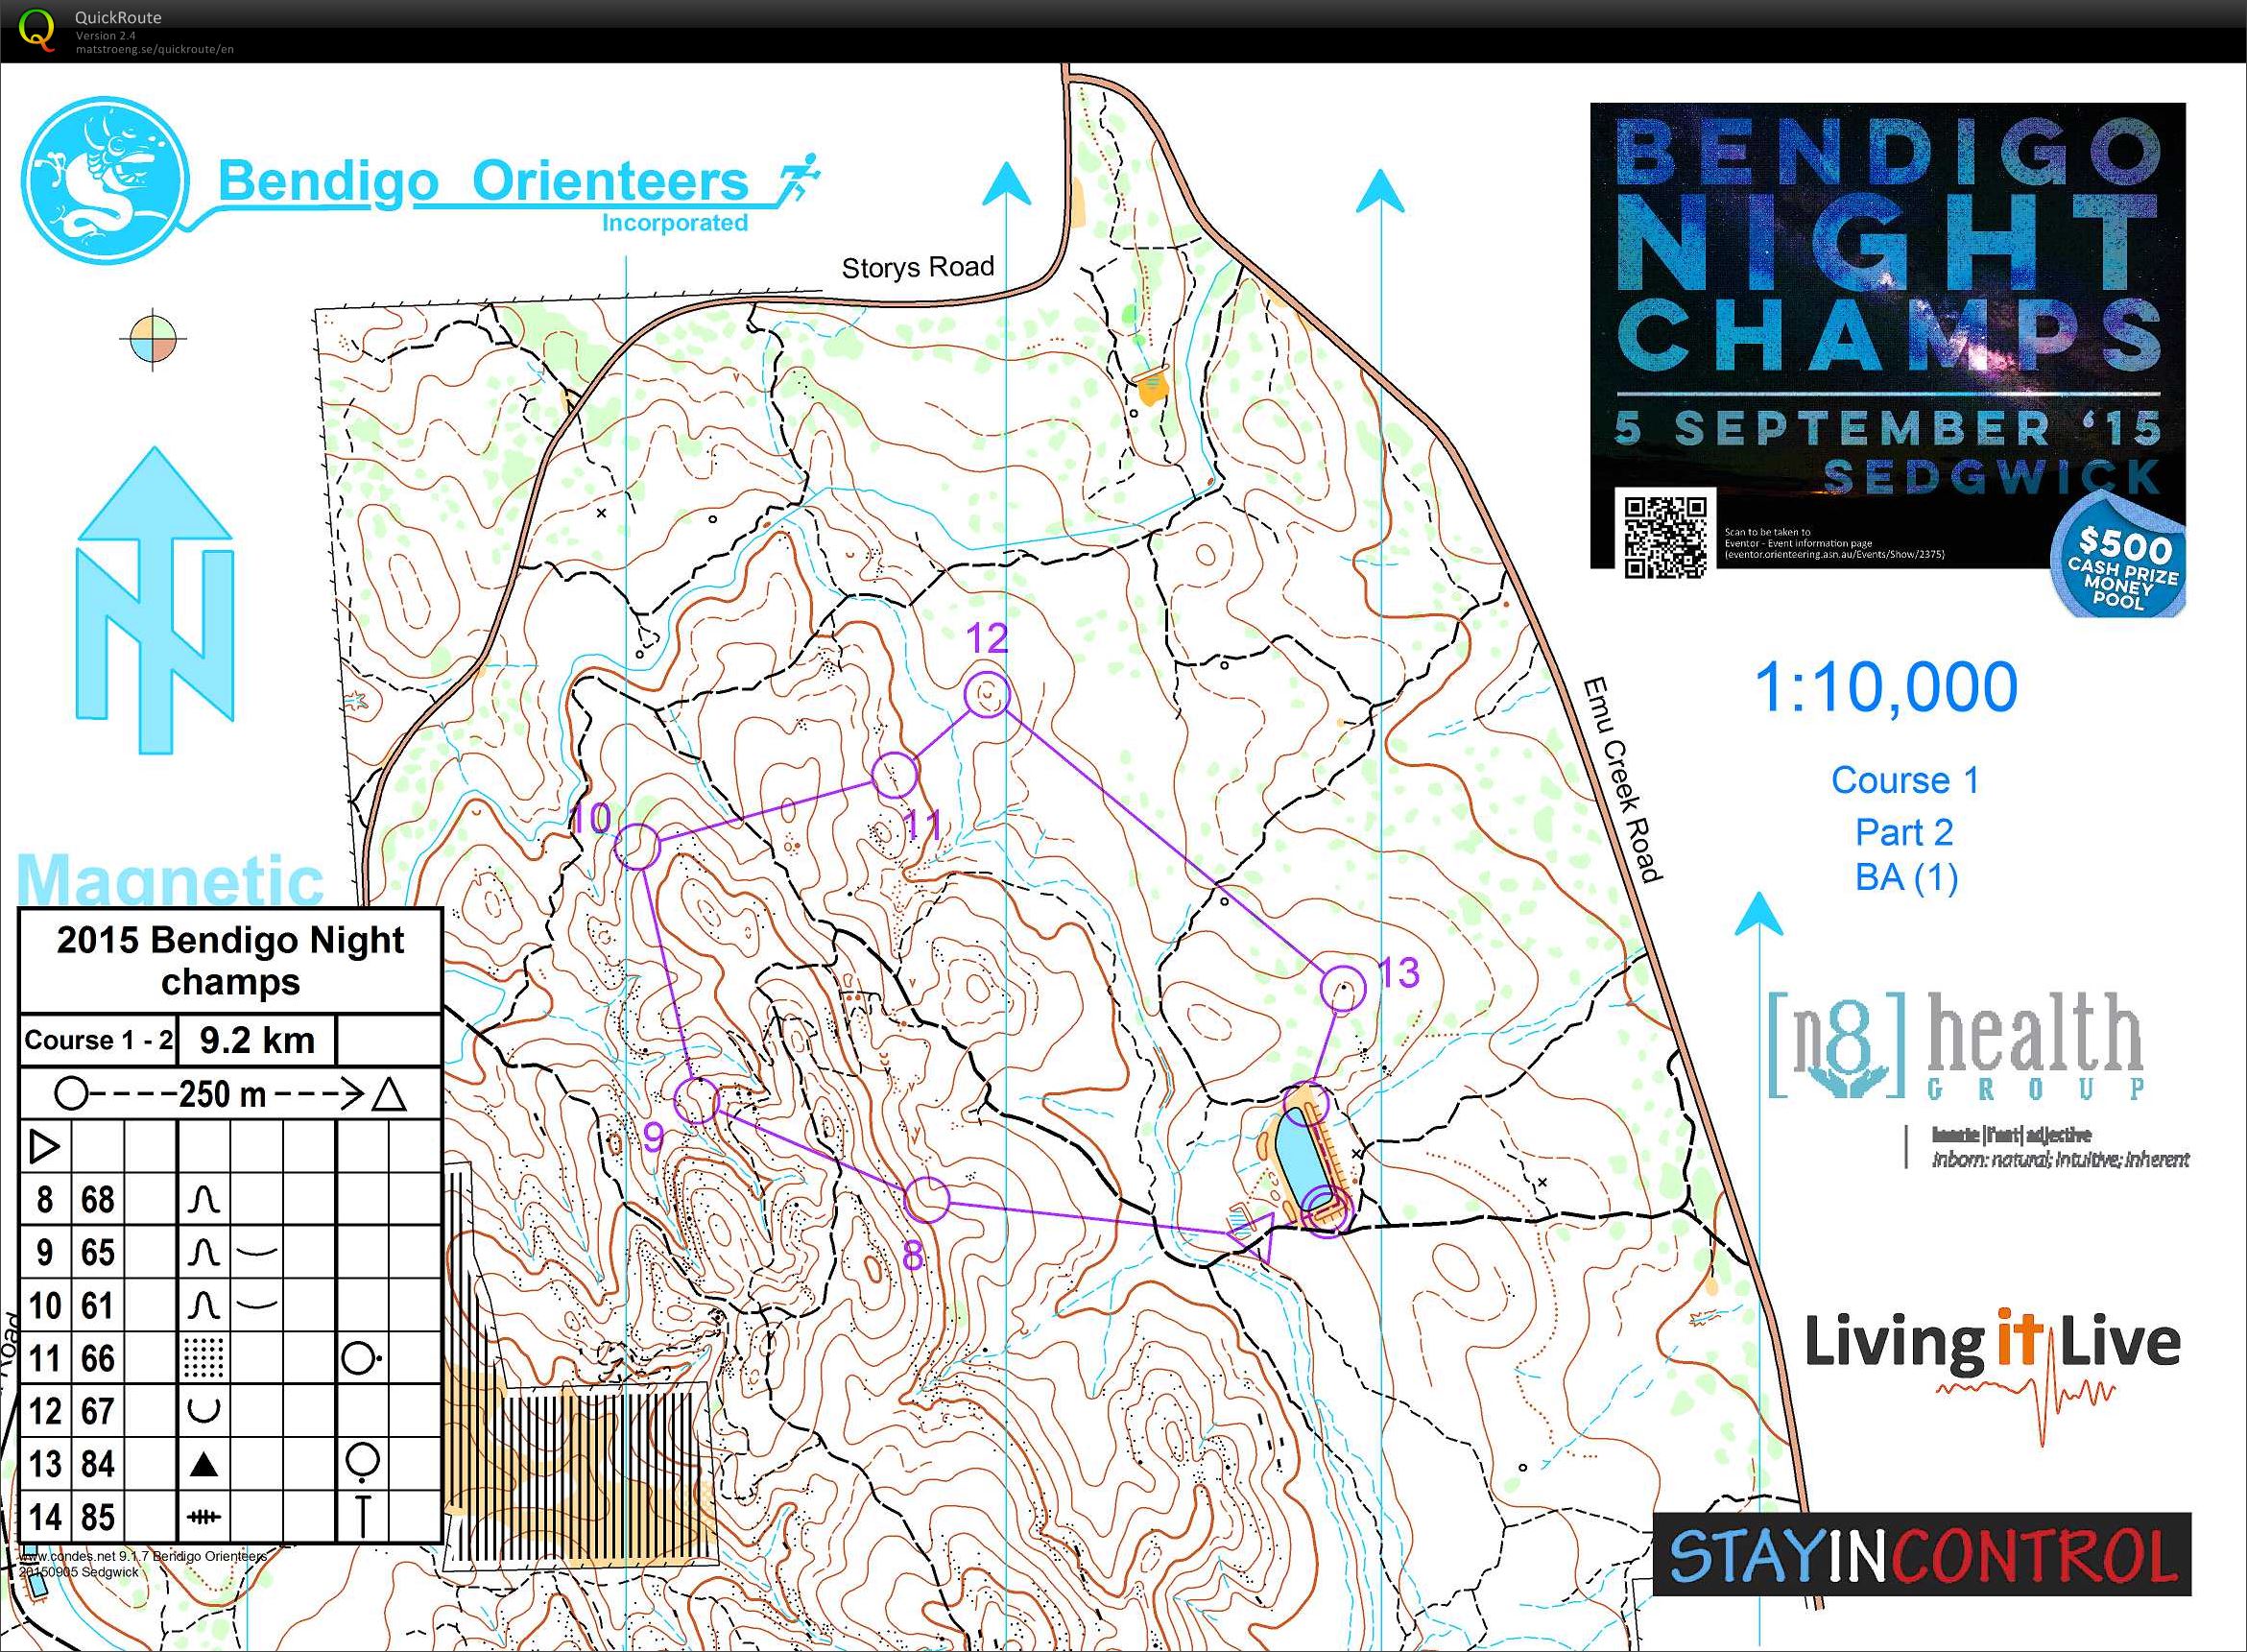 Bendigo Night Champs - Map 2 (05/09/2015)